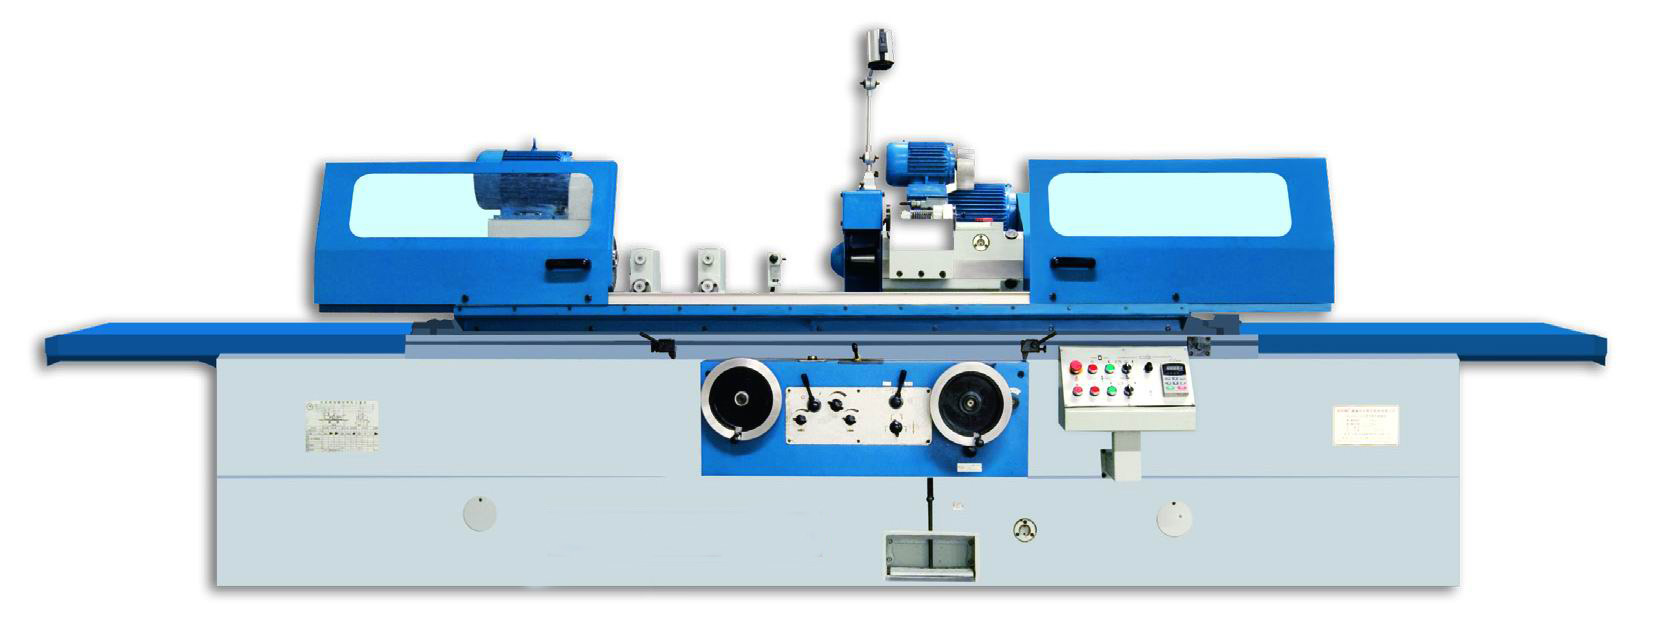 MW1420 Universal cylindrical grinding machine